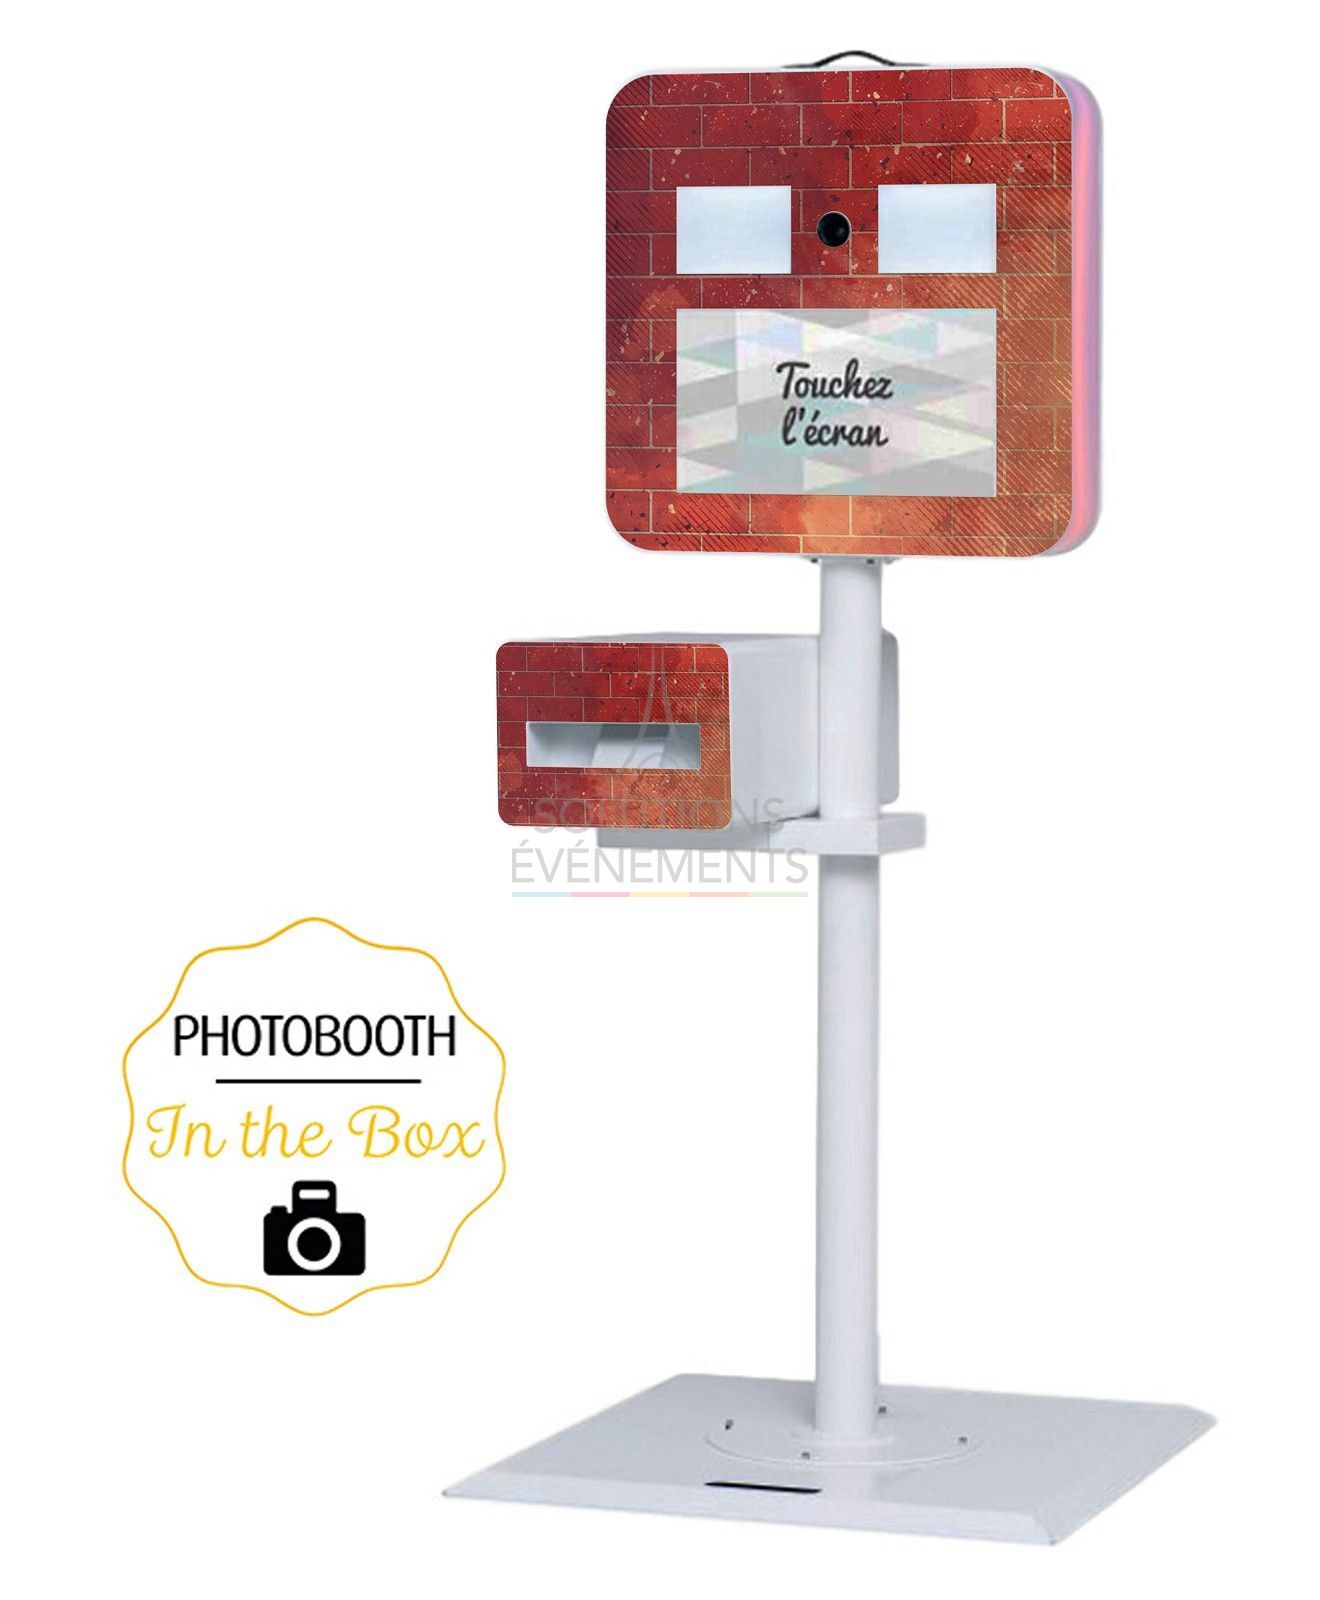 Photobooth rental with instant printing selfie terminal